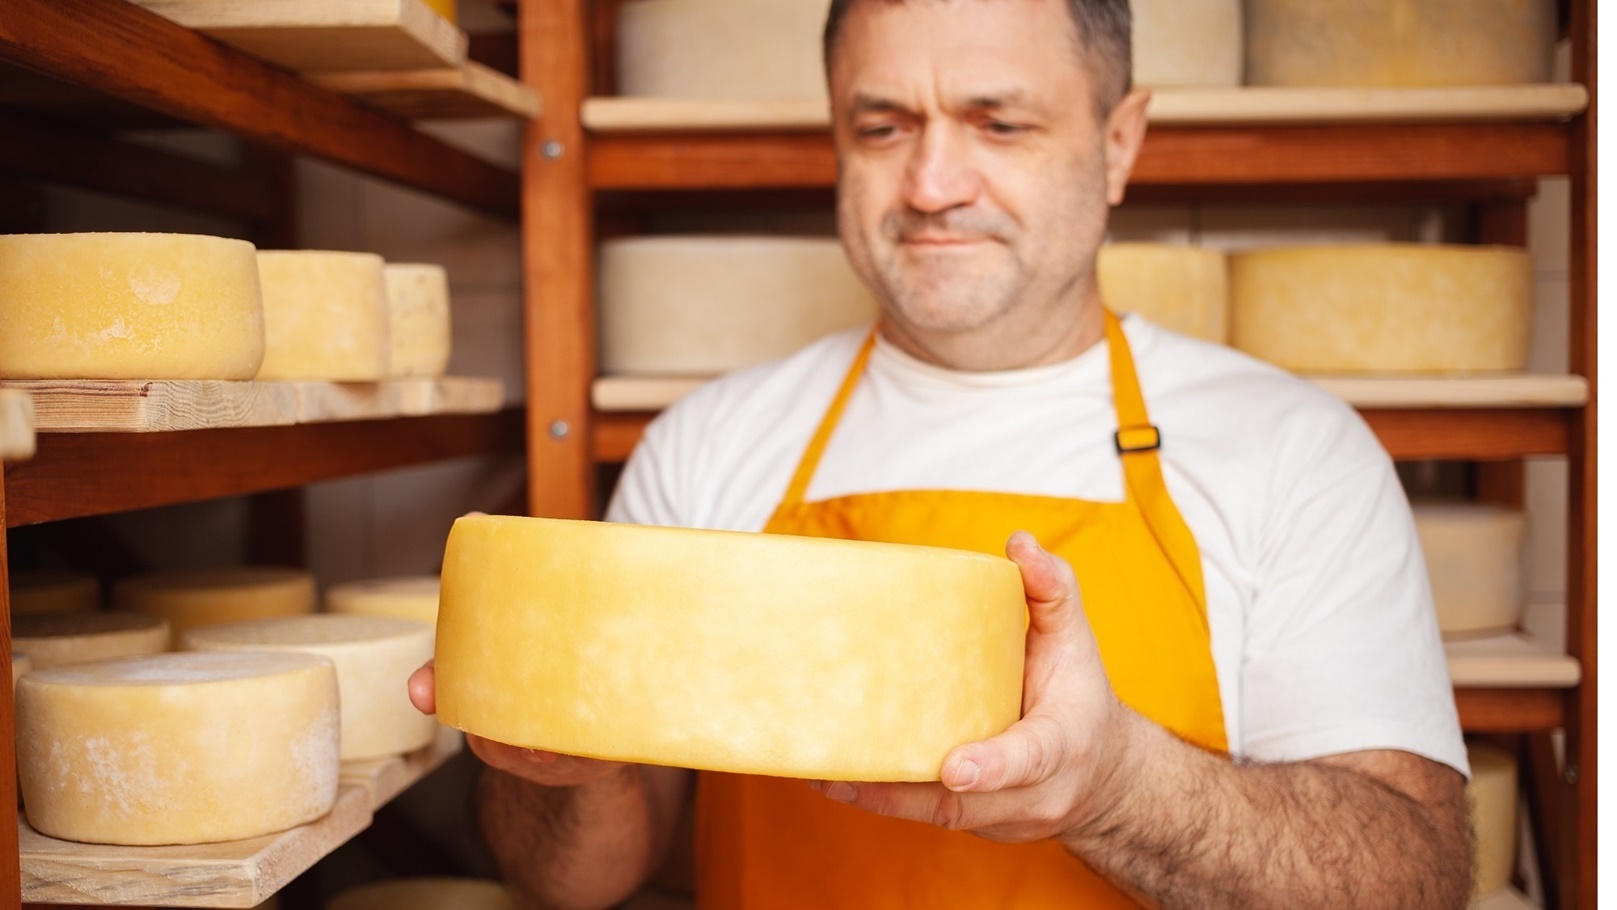 portrait-of-cheesemaker-in-cellar-basement-home-2022-01-19-00-21-47-utc